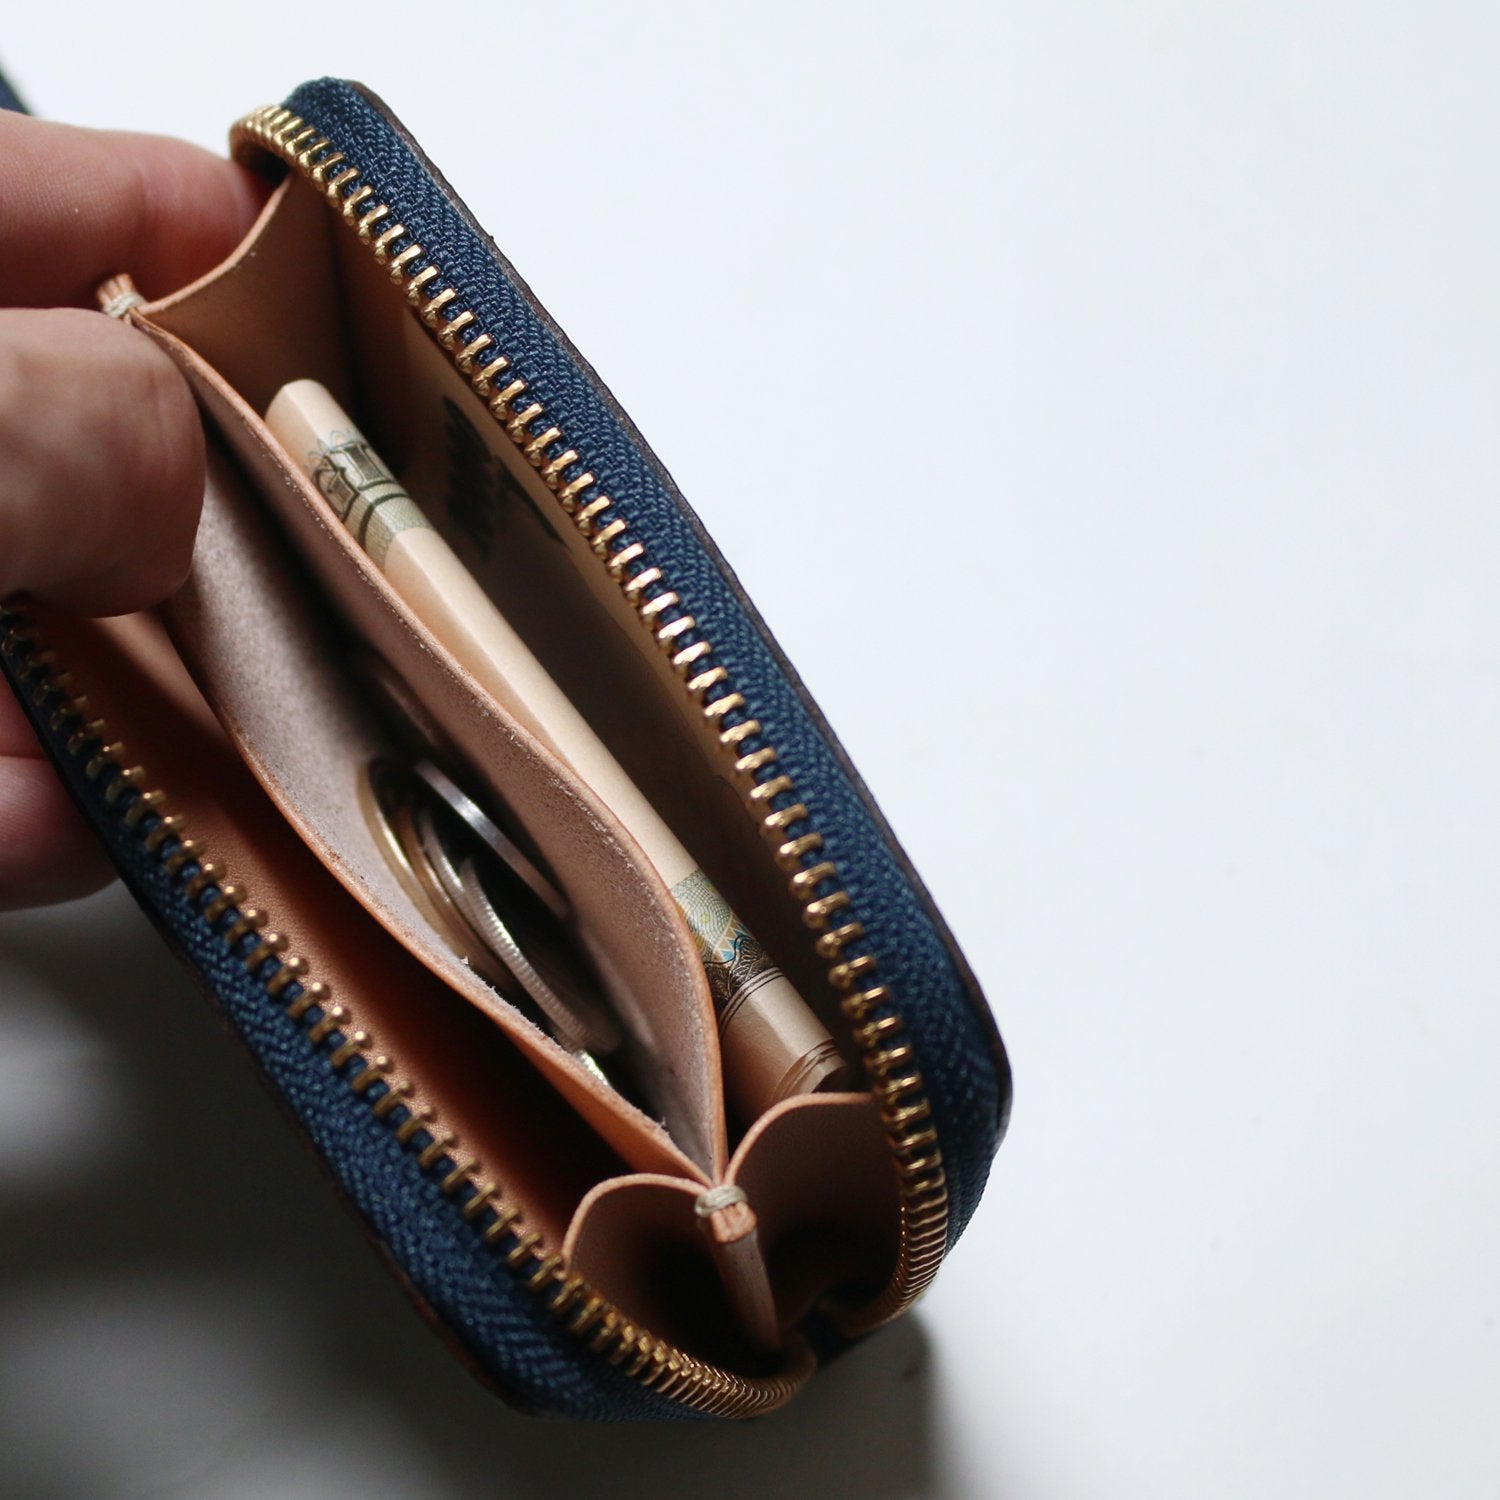 SL307 KUROZAN indigo zip small wallet